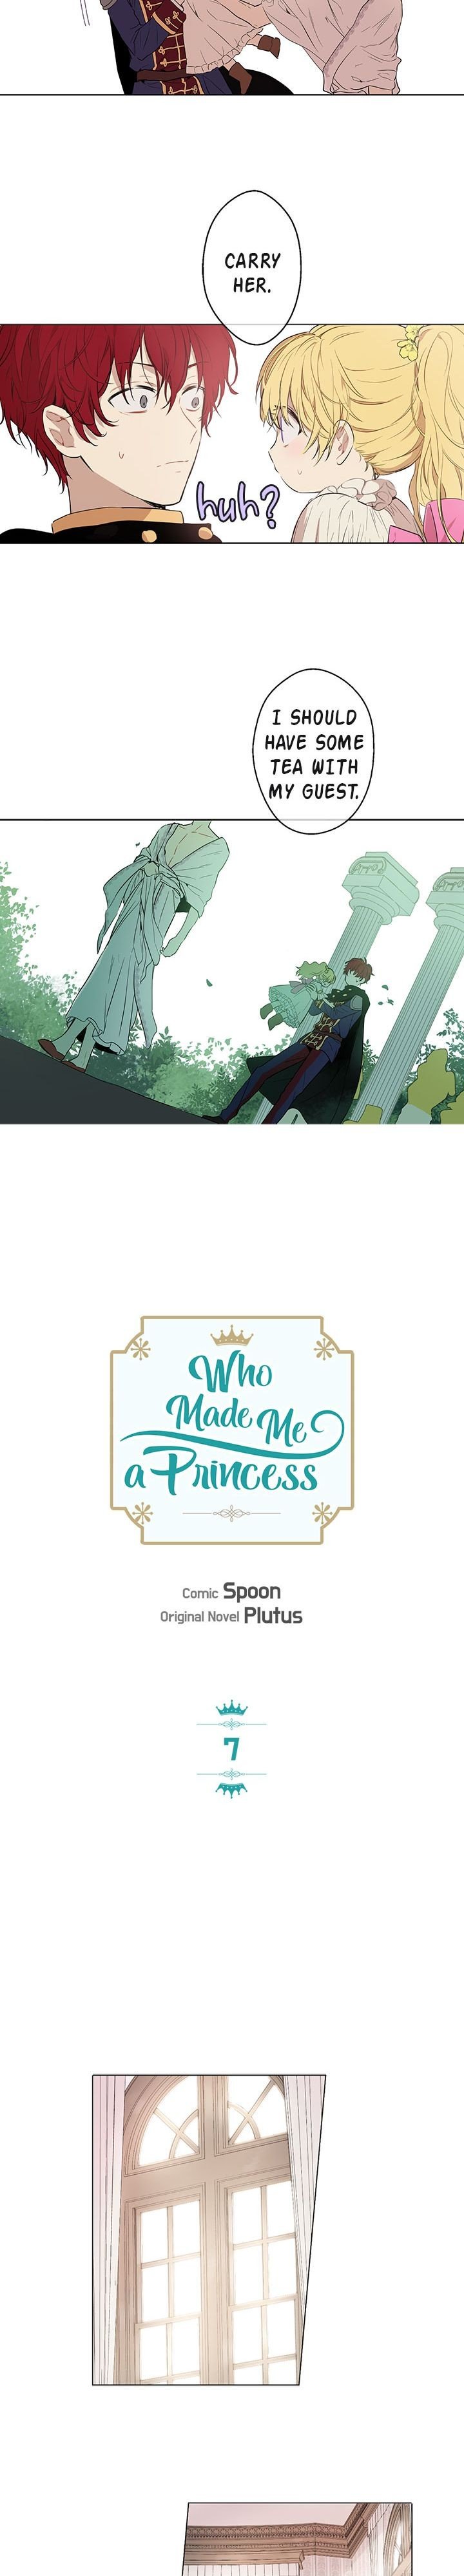 Who Made Me a Princess - Chapter 7 Page 4